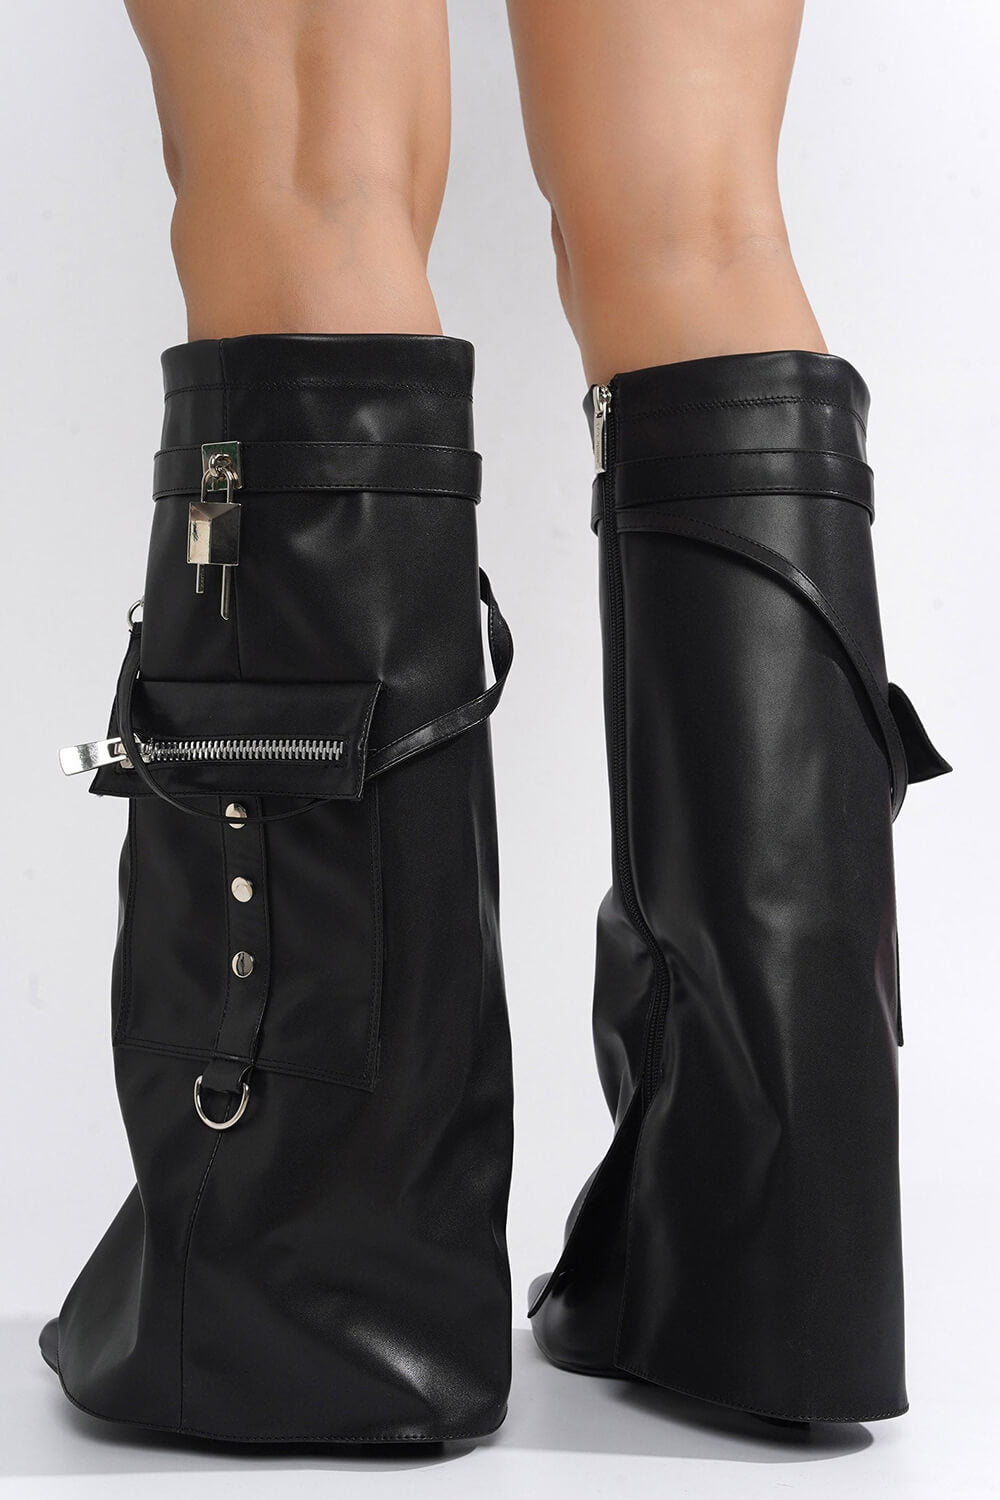 Padlock Pocket Detail Fold Over Pointed Toe Wedge Heel Knee High Long Boots - Black